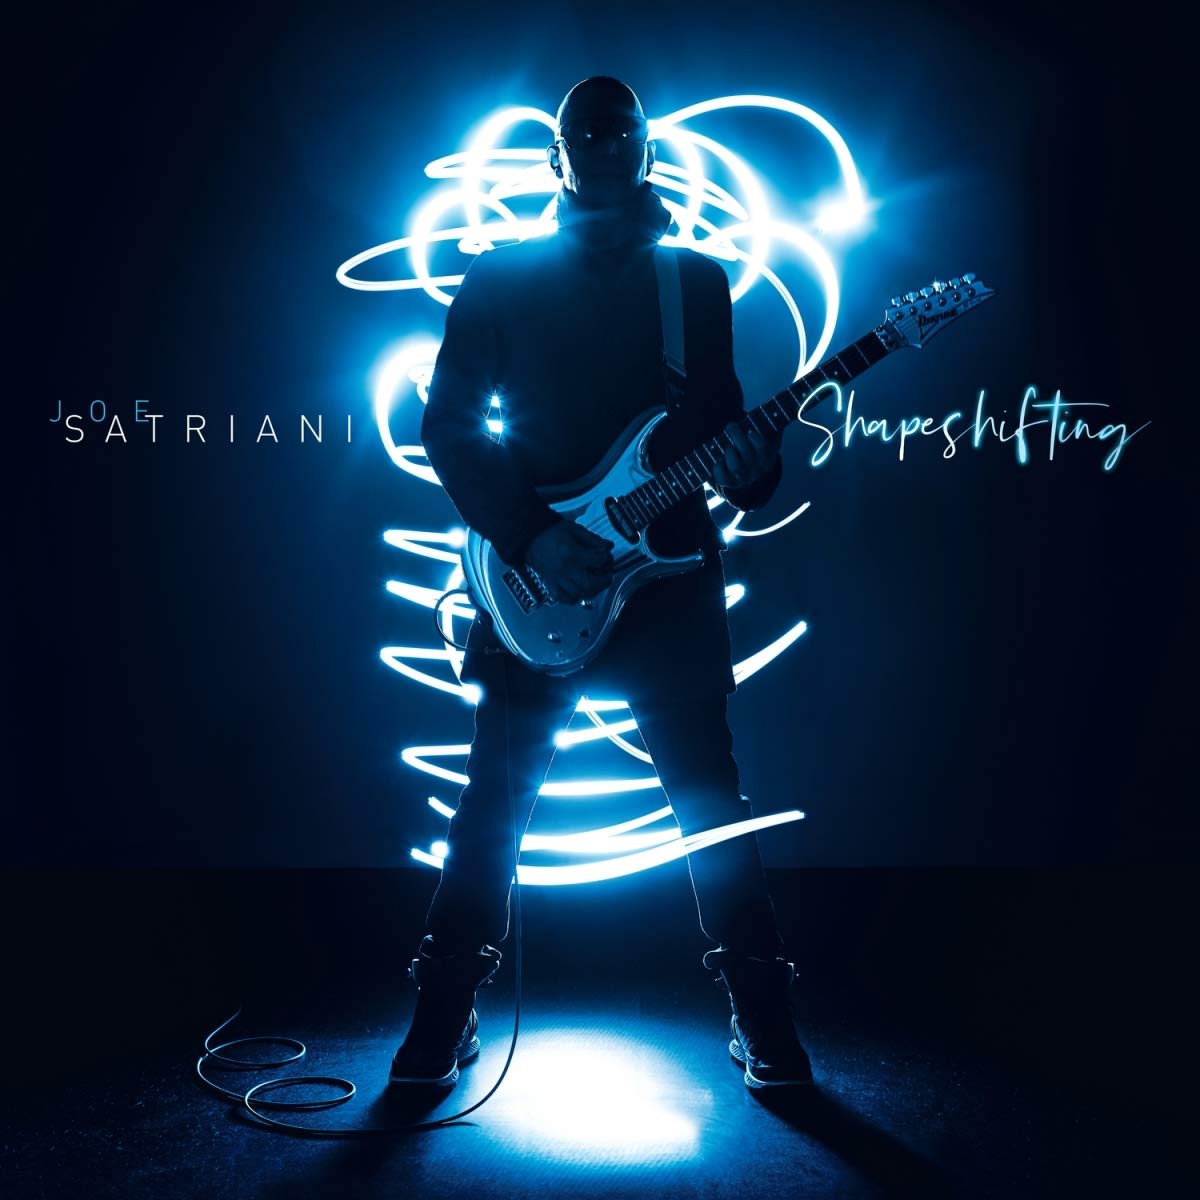 Joe Satriani: "Shapeshifting" – 2020